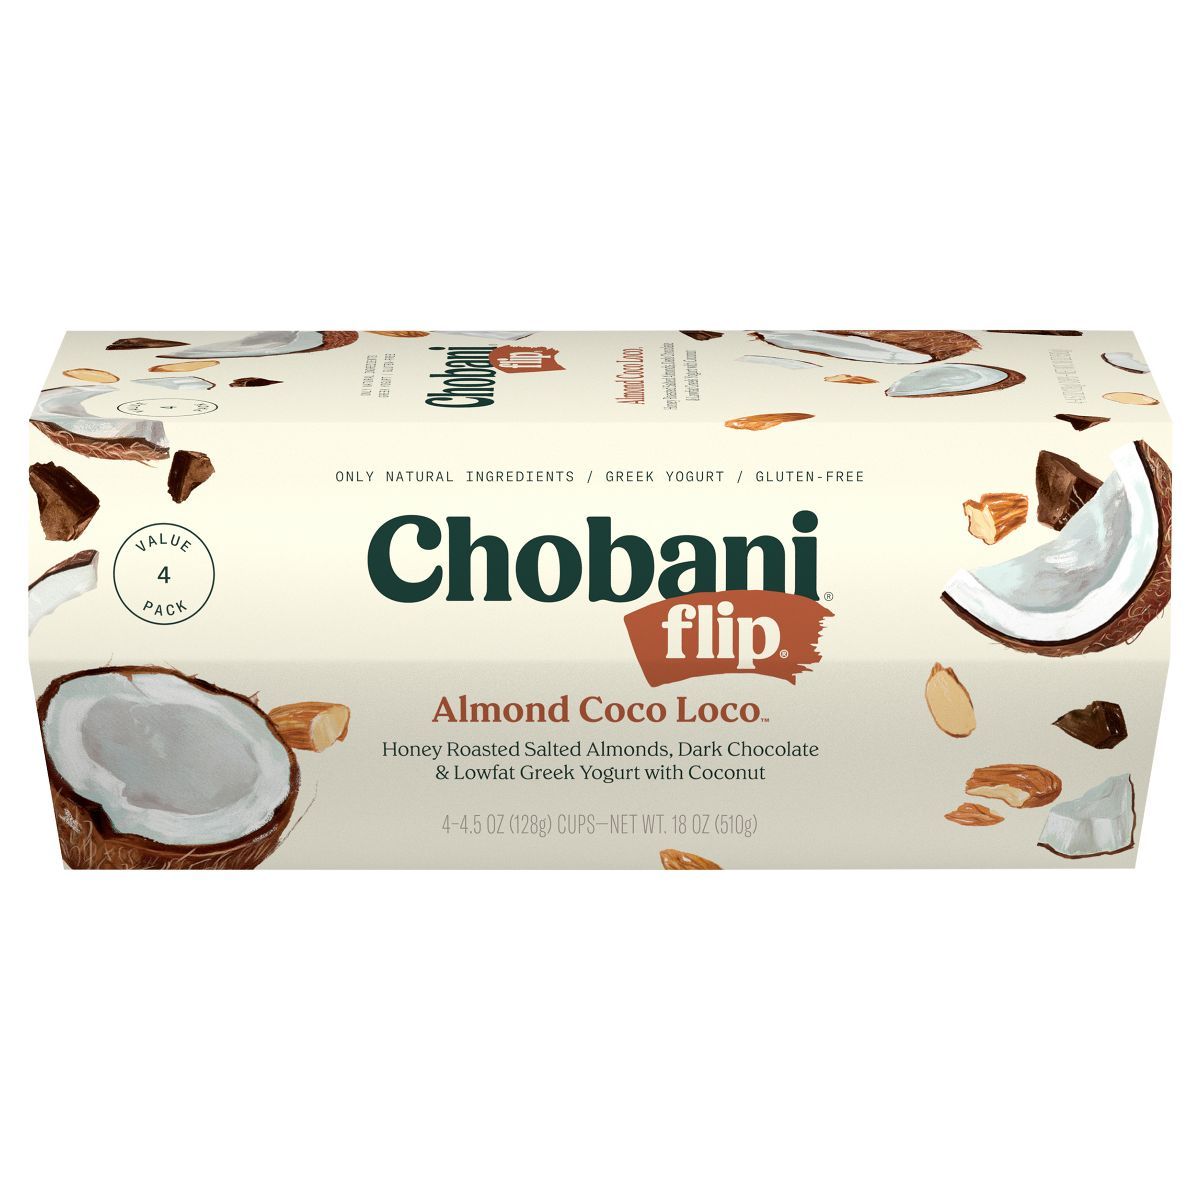 Chobani Flip Chocolate Almond Coco Loco Greek Yogurt - 4ct/4.5oz Cups | Target